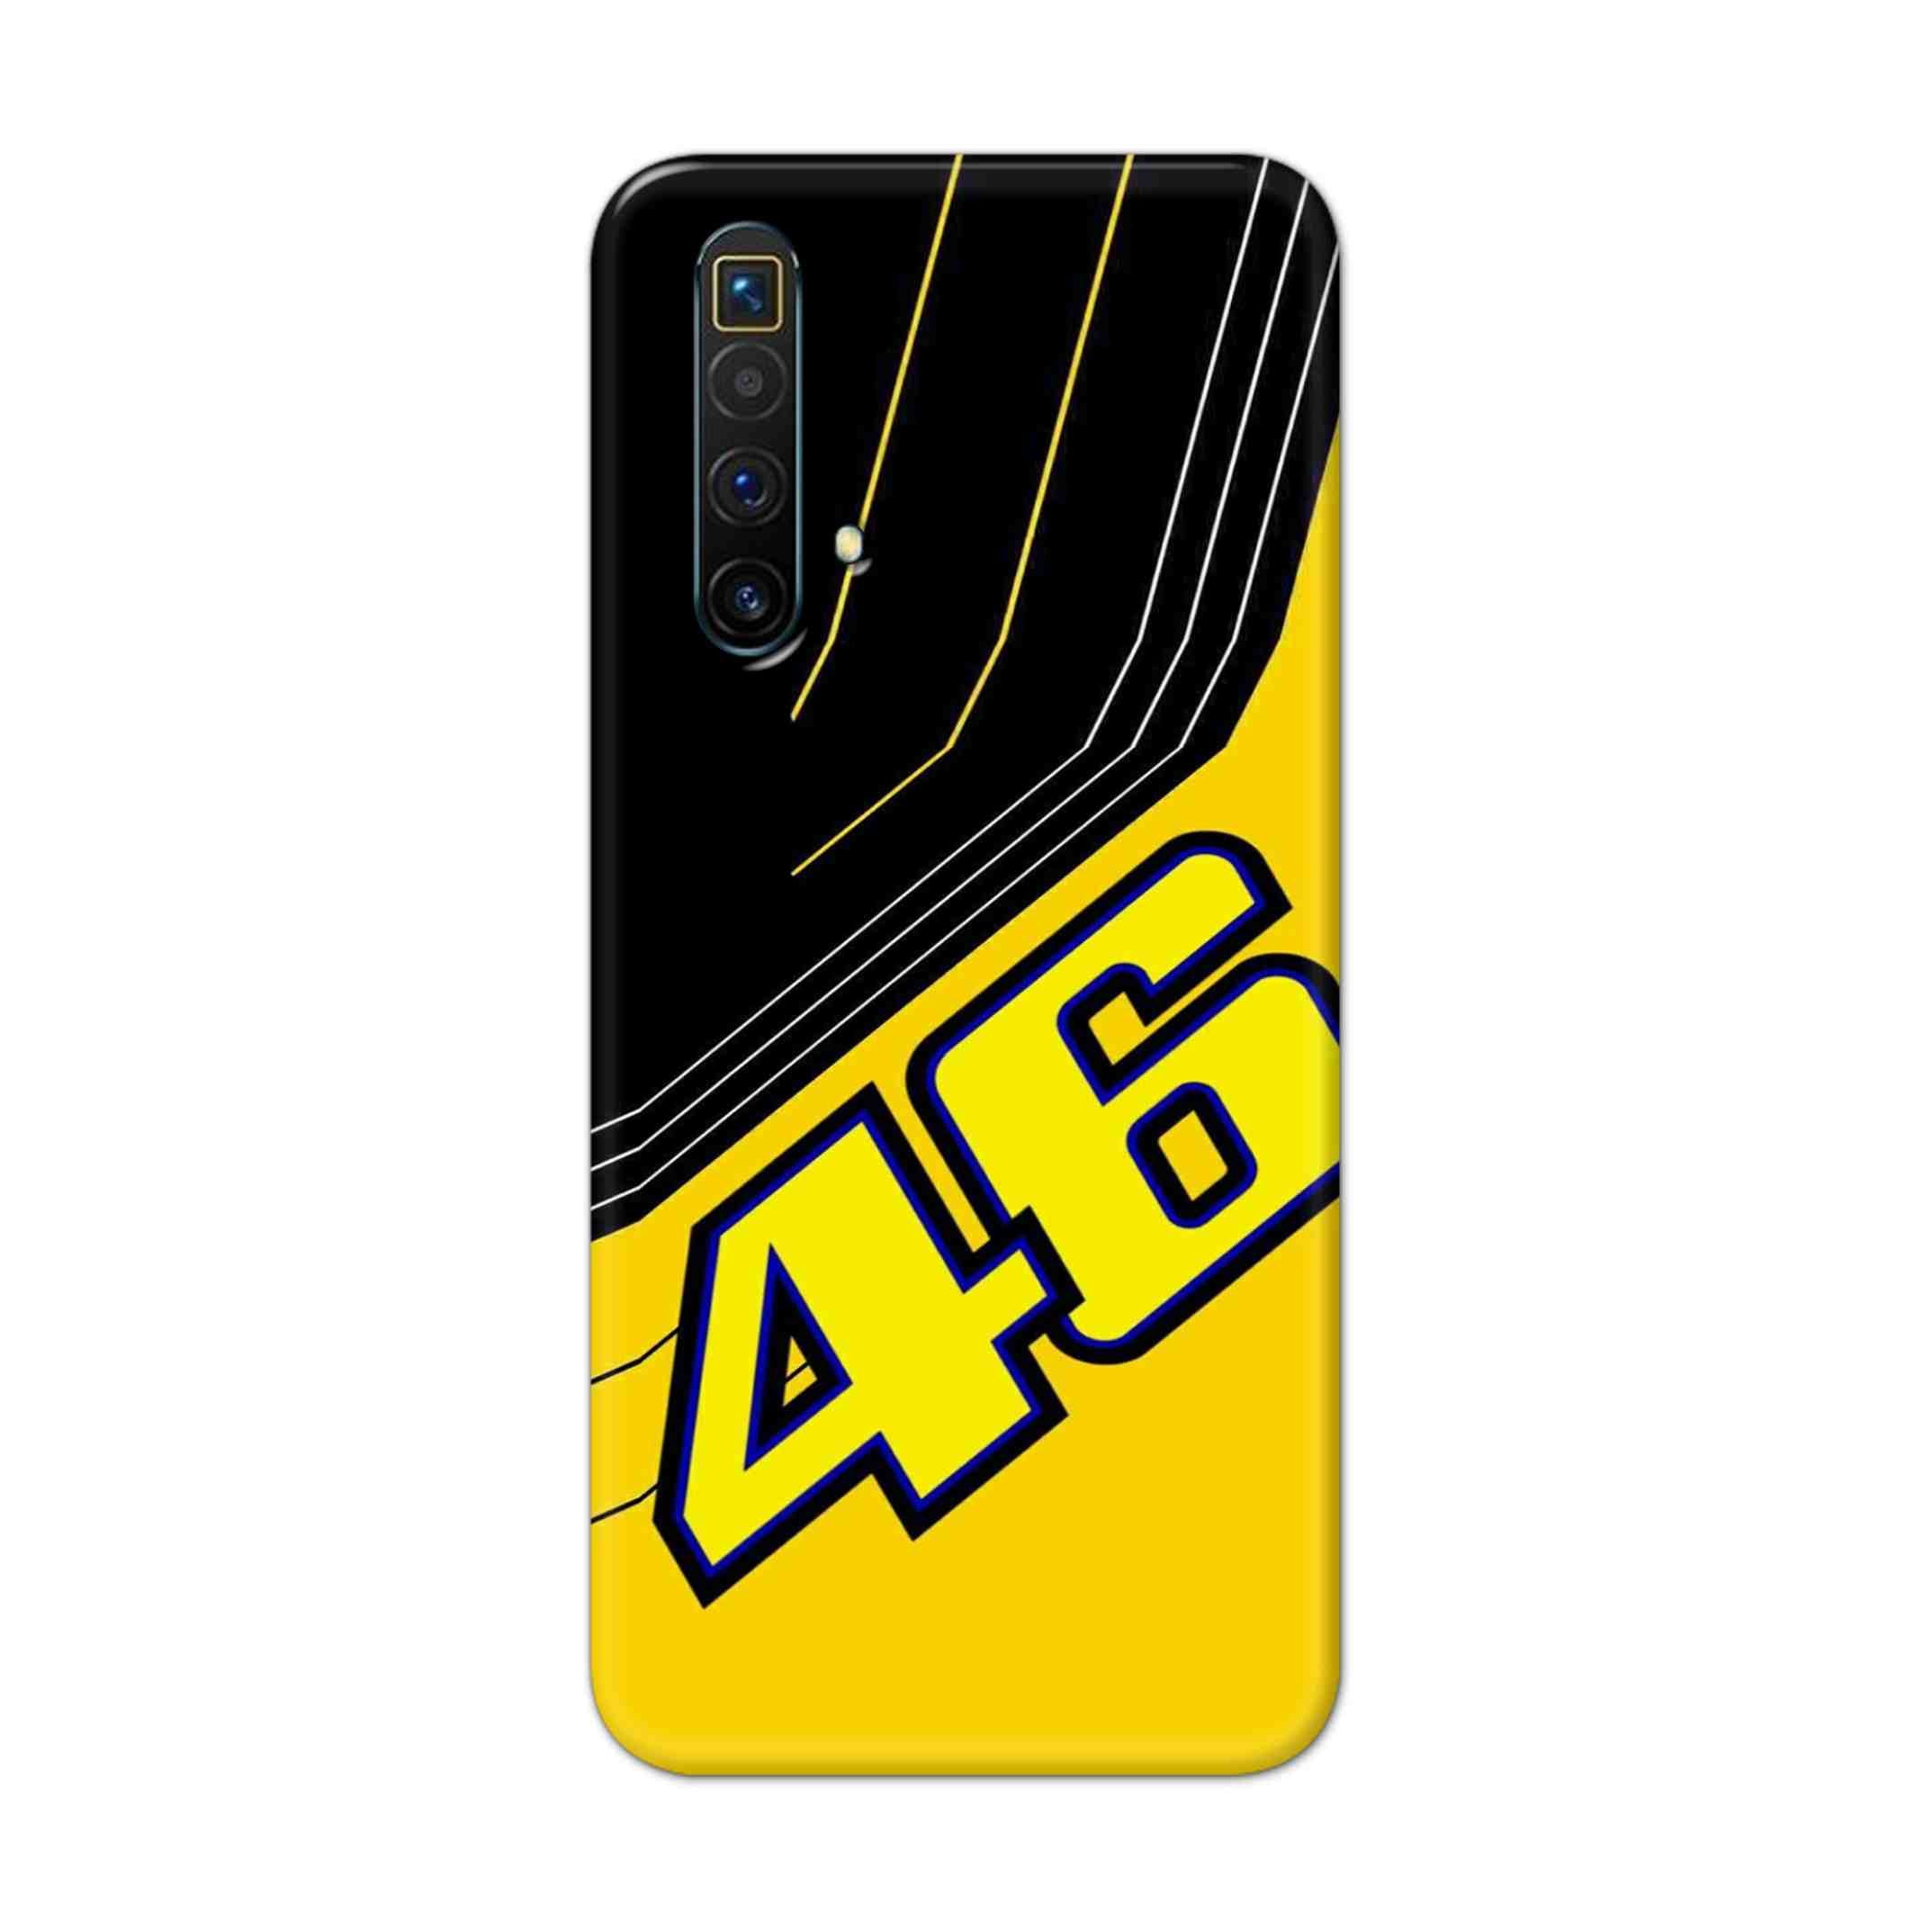 Buy 46 Hard Back Mobile Phone Case Cover For Oppo Realme X3 Online